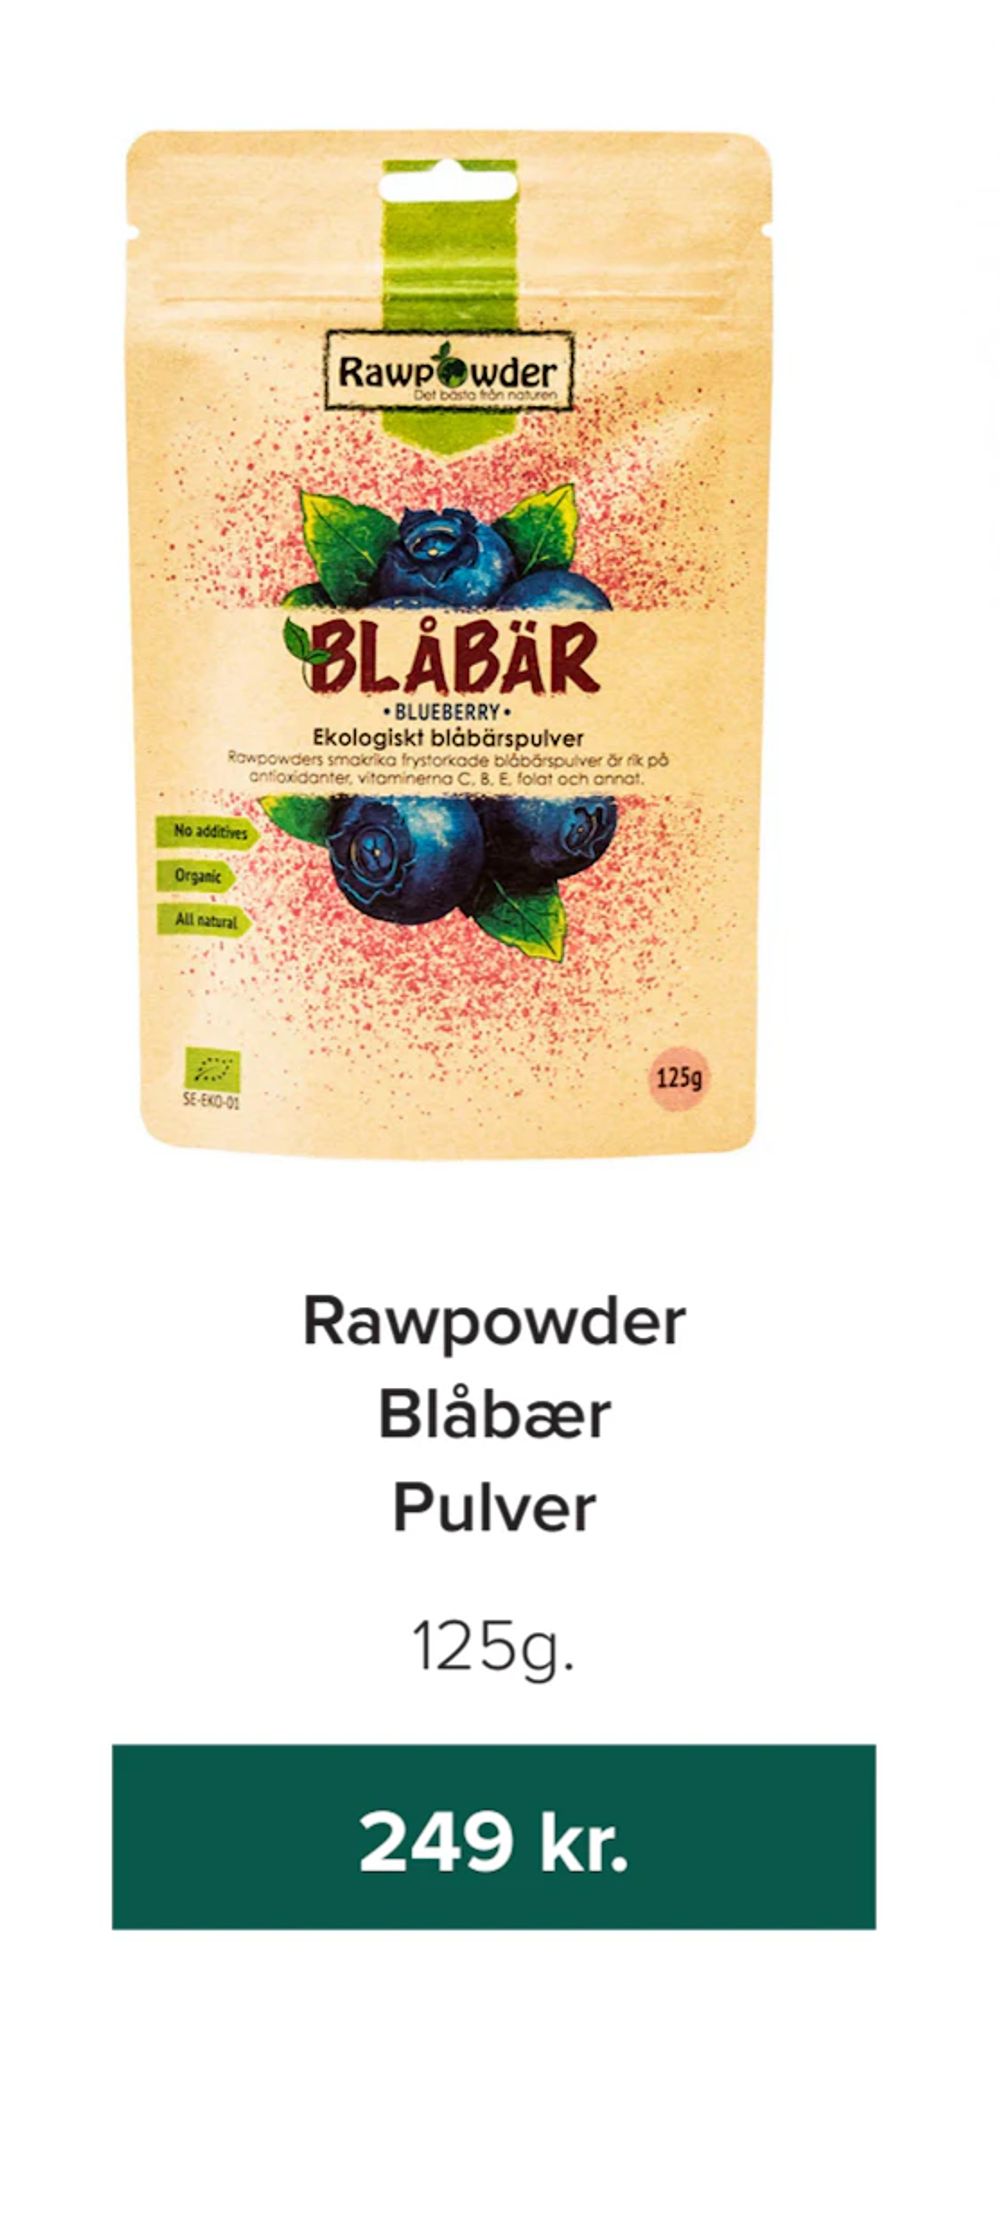 Tilbud på Rawpowder Blåbær Pulver fra Helsemin til 249 kr.